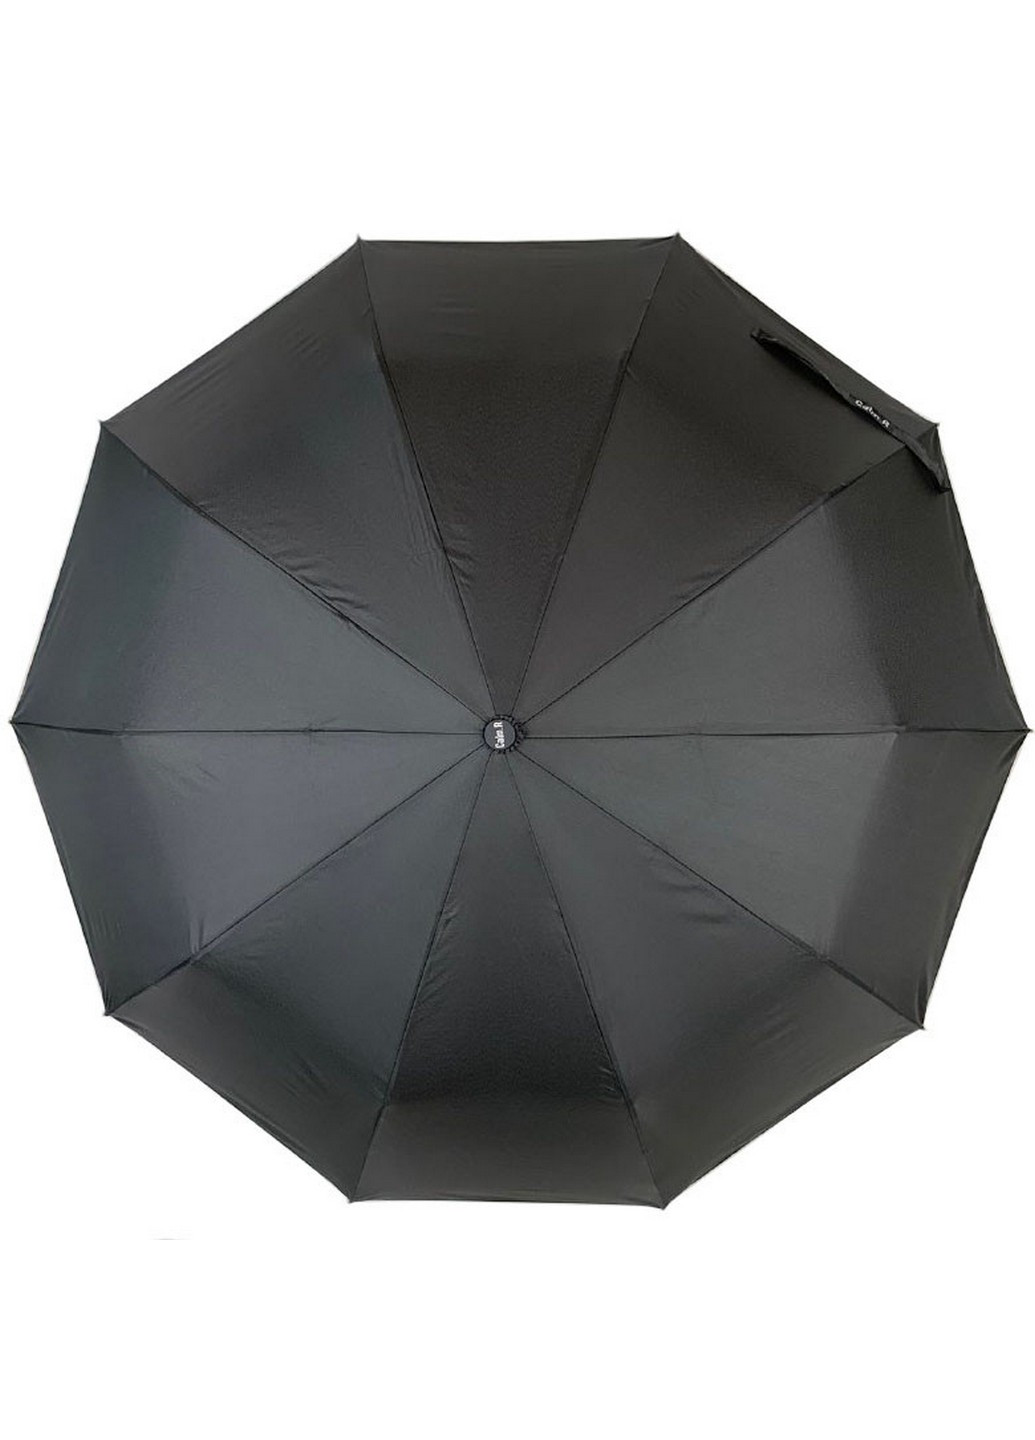 Мужской зонт полуавтомат 98 см Calm Rain (259206191)